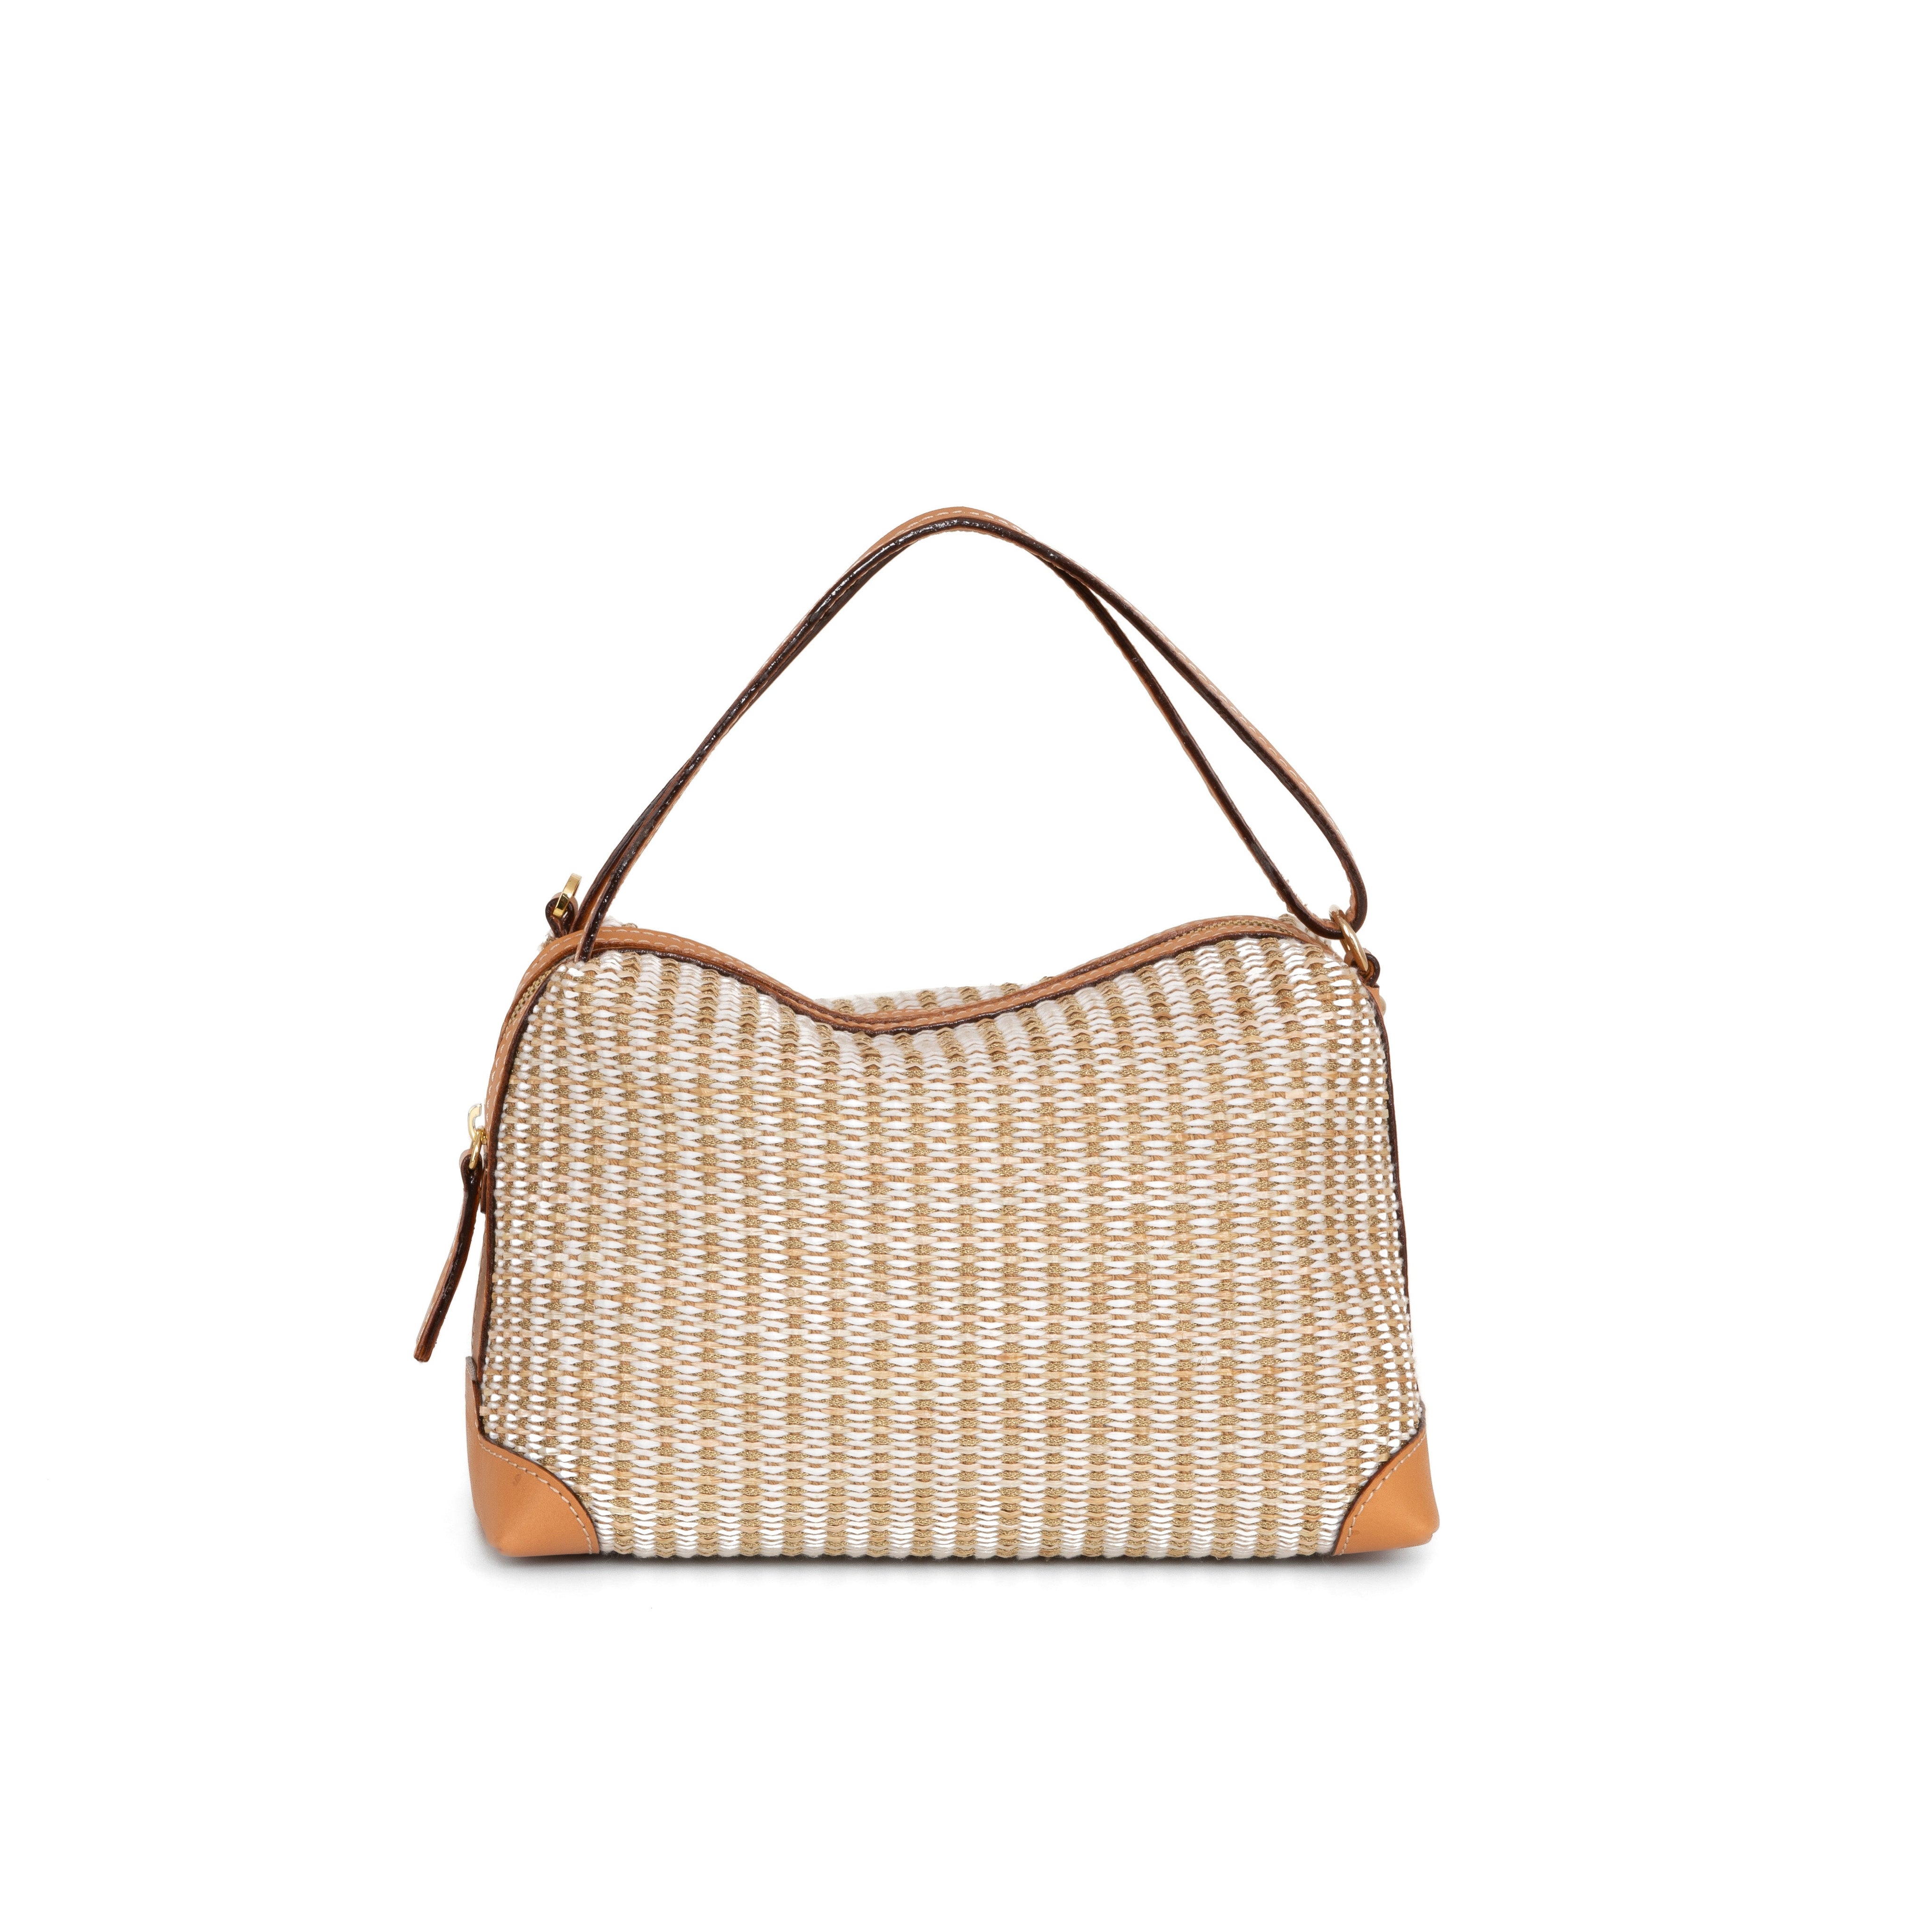 CORINNA Veg-Tan Leather Top Handle Bag by Gianni Conti